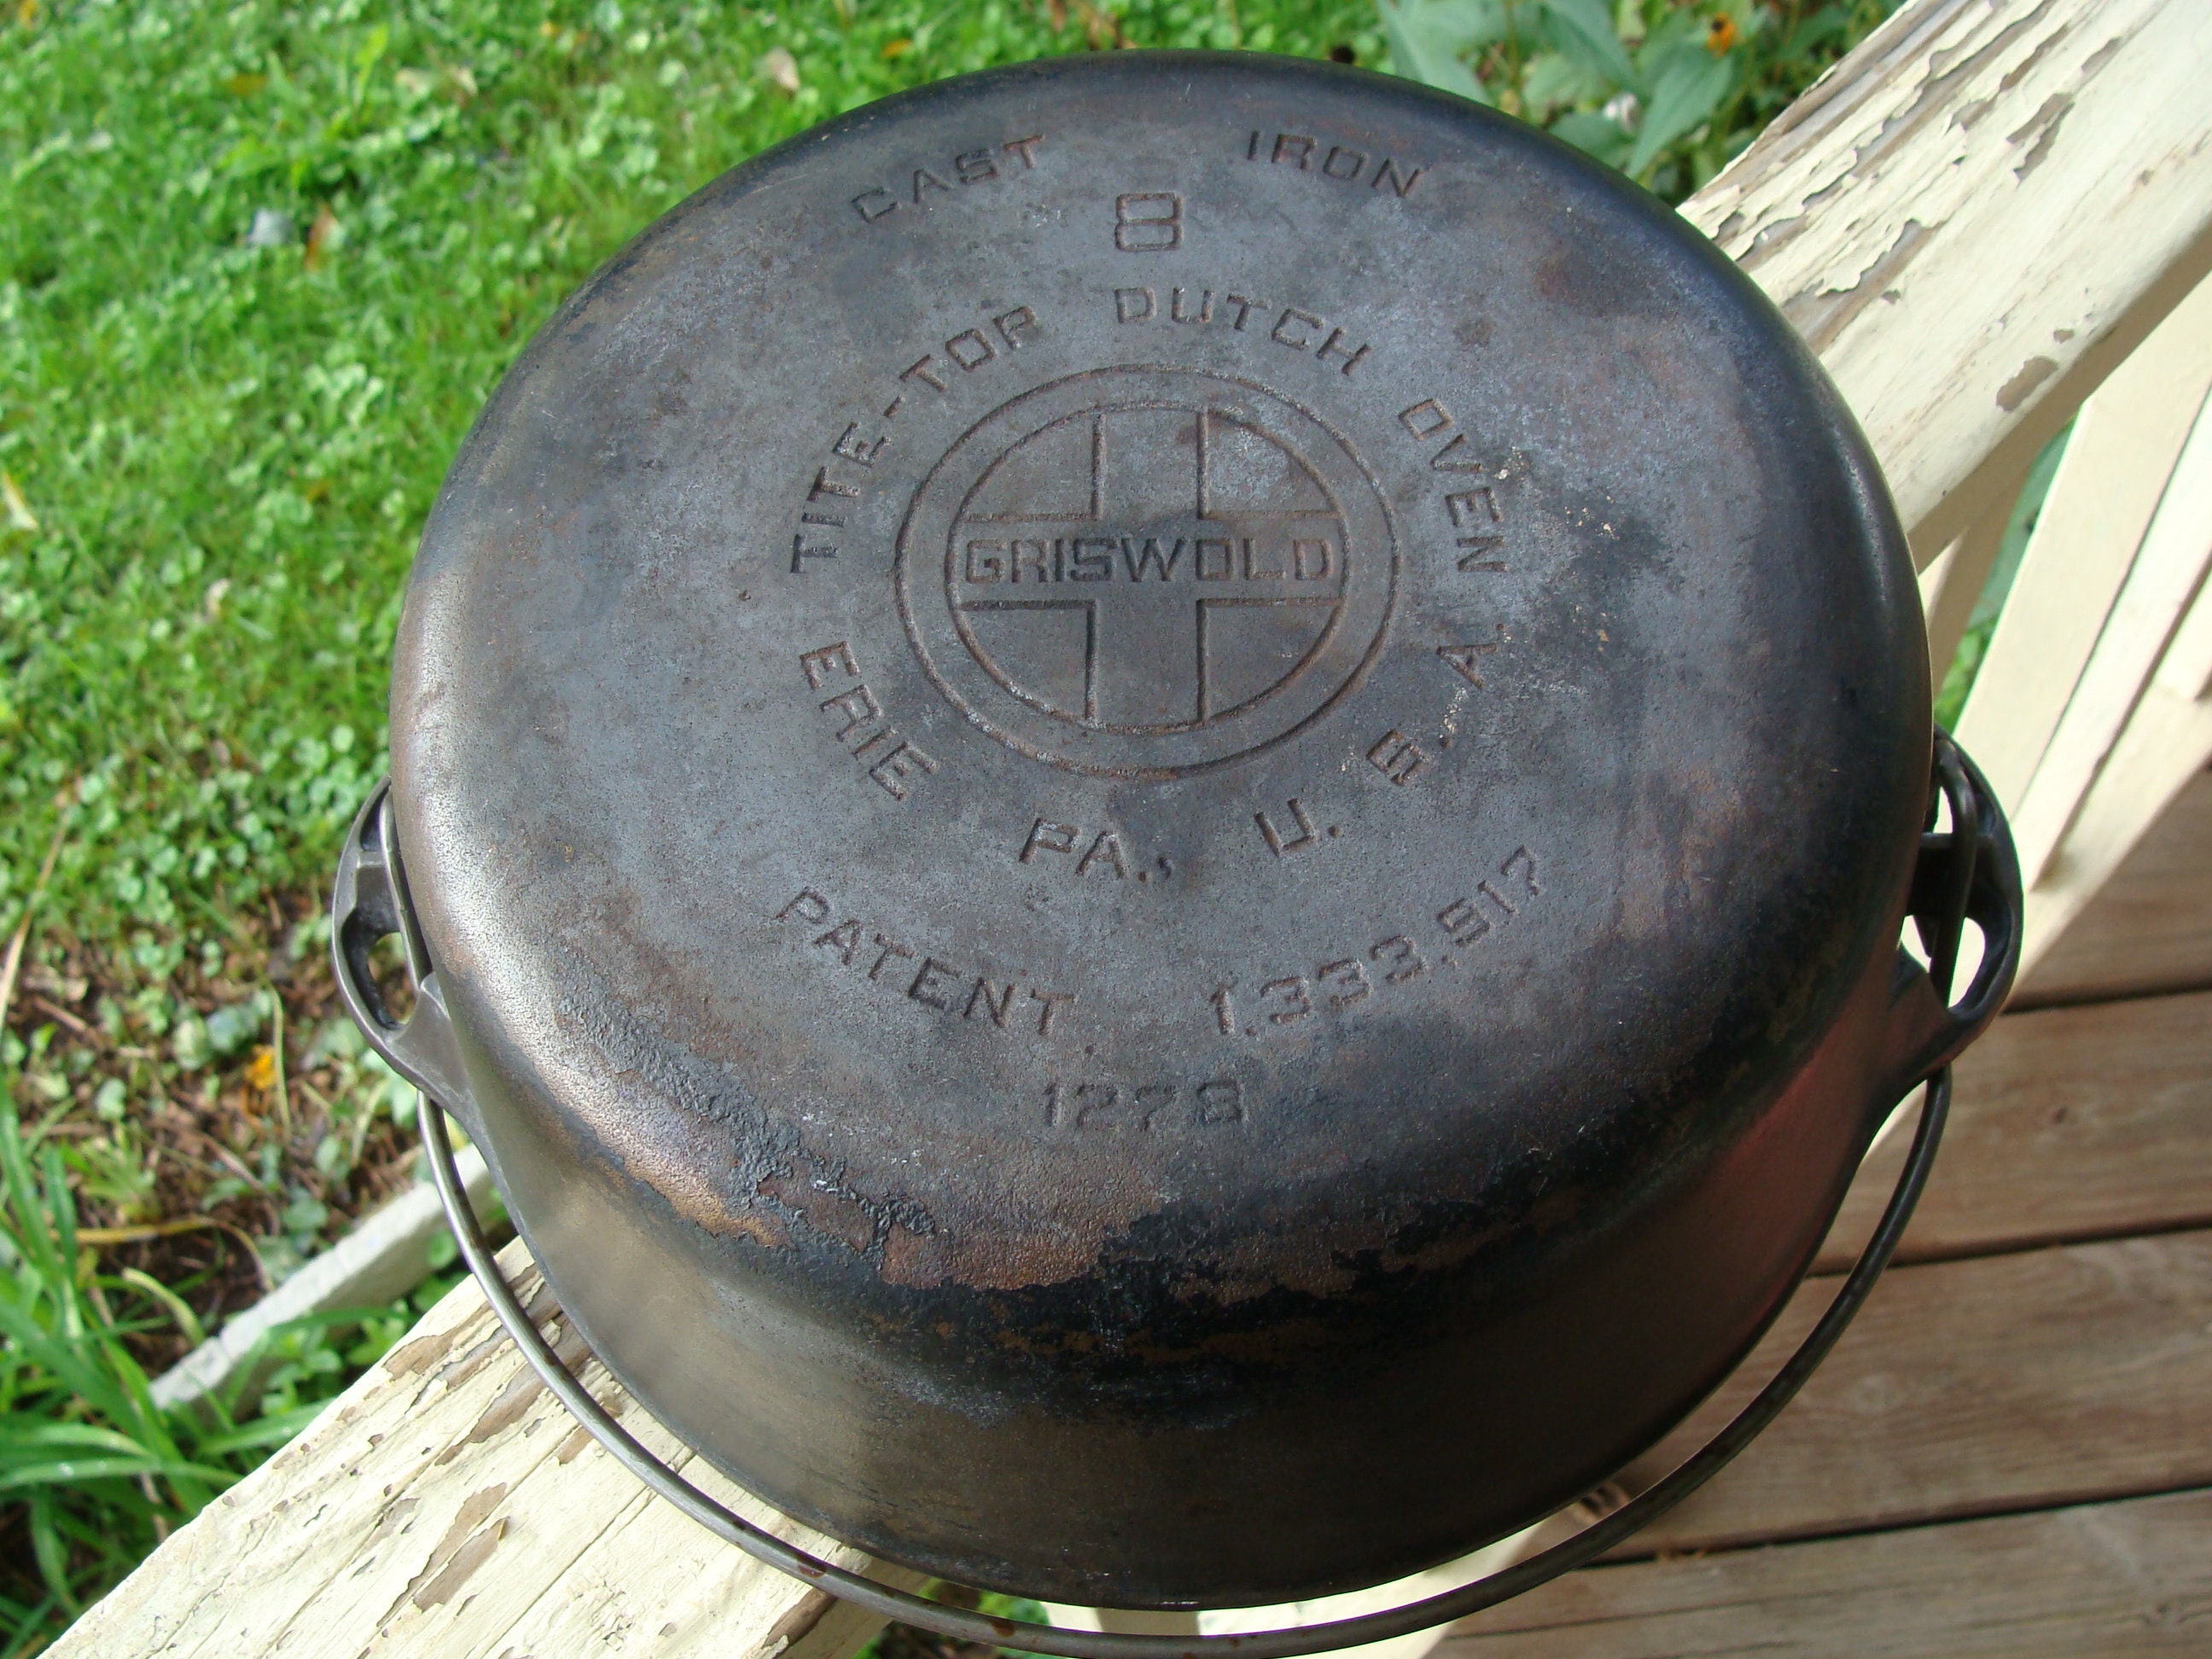 Vintage Griswold Cast Iron Cornbread Pan – Mimi's Attic Ithaca